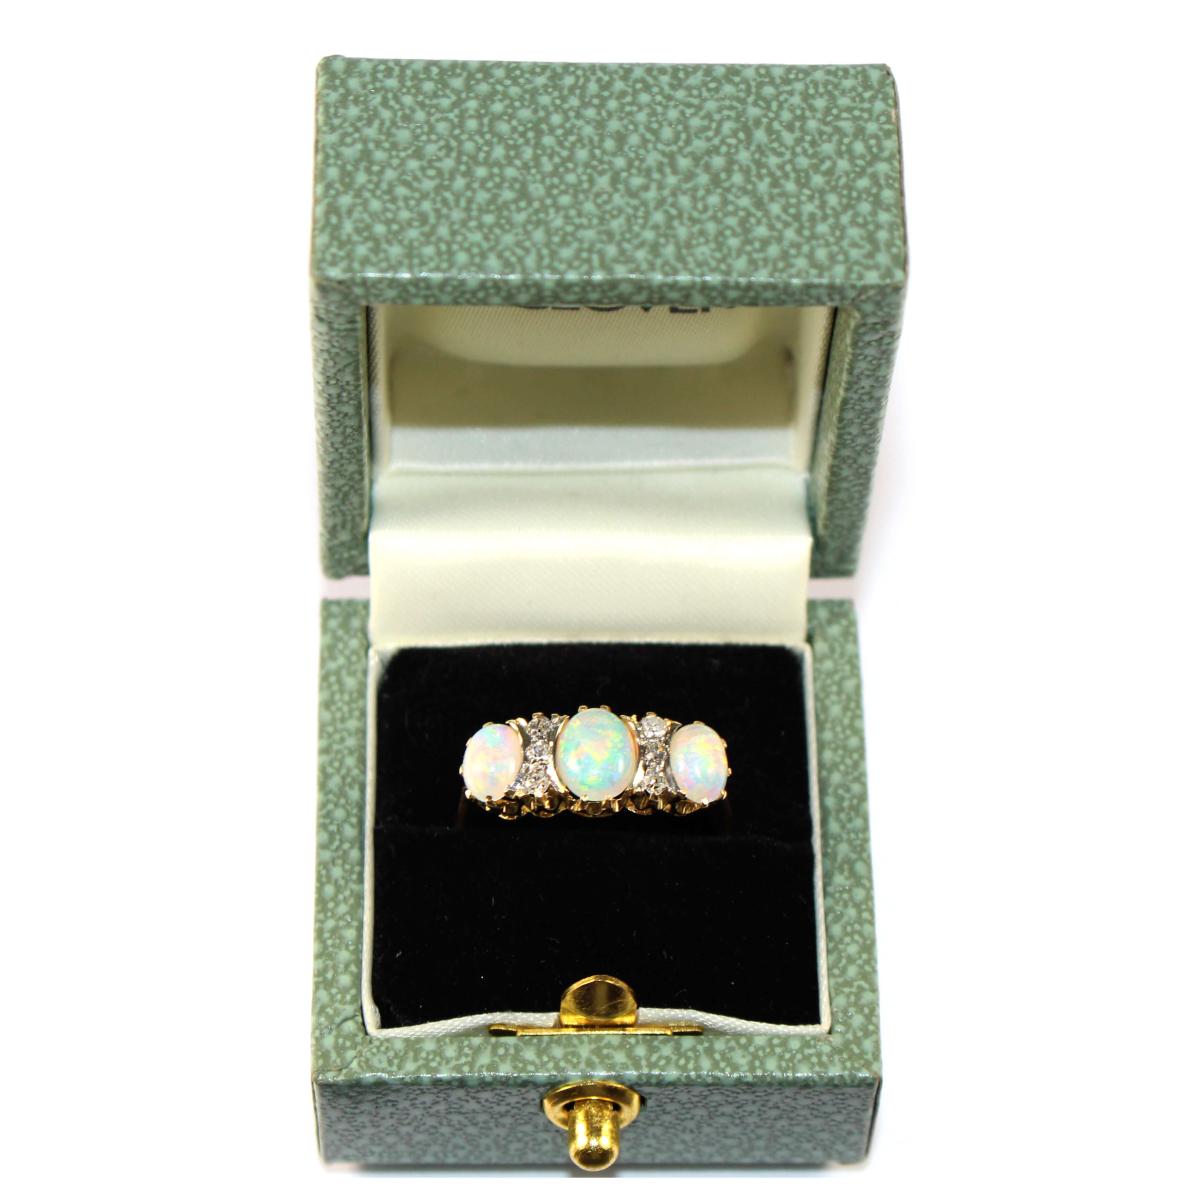 Edwardian Opal and Diamond Ring circa 1910